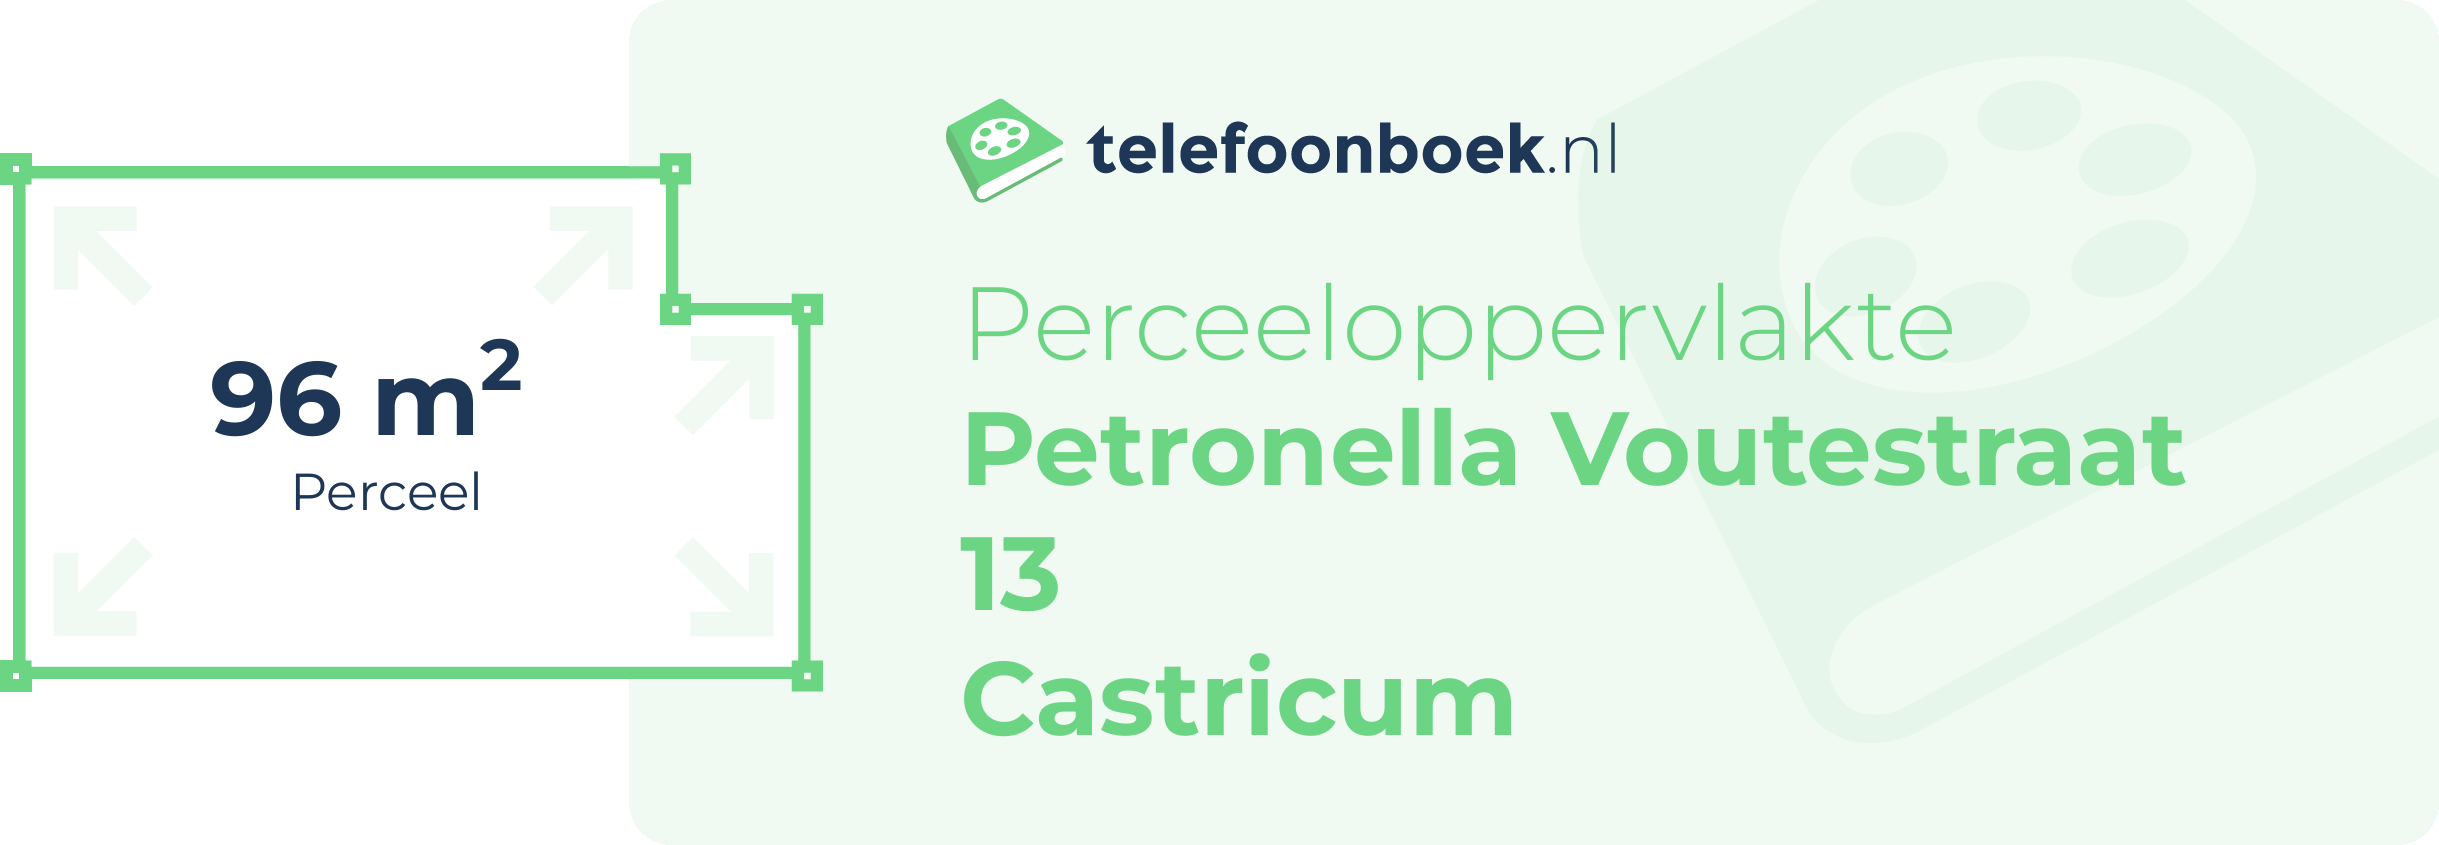 Perceeloppervlakte Petronella Voutestraat 13 Castricum